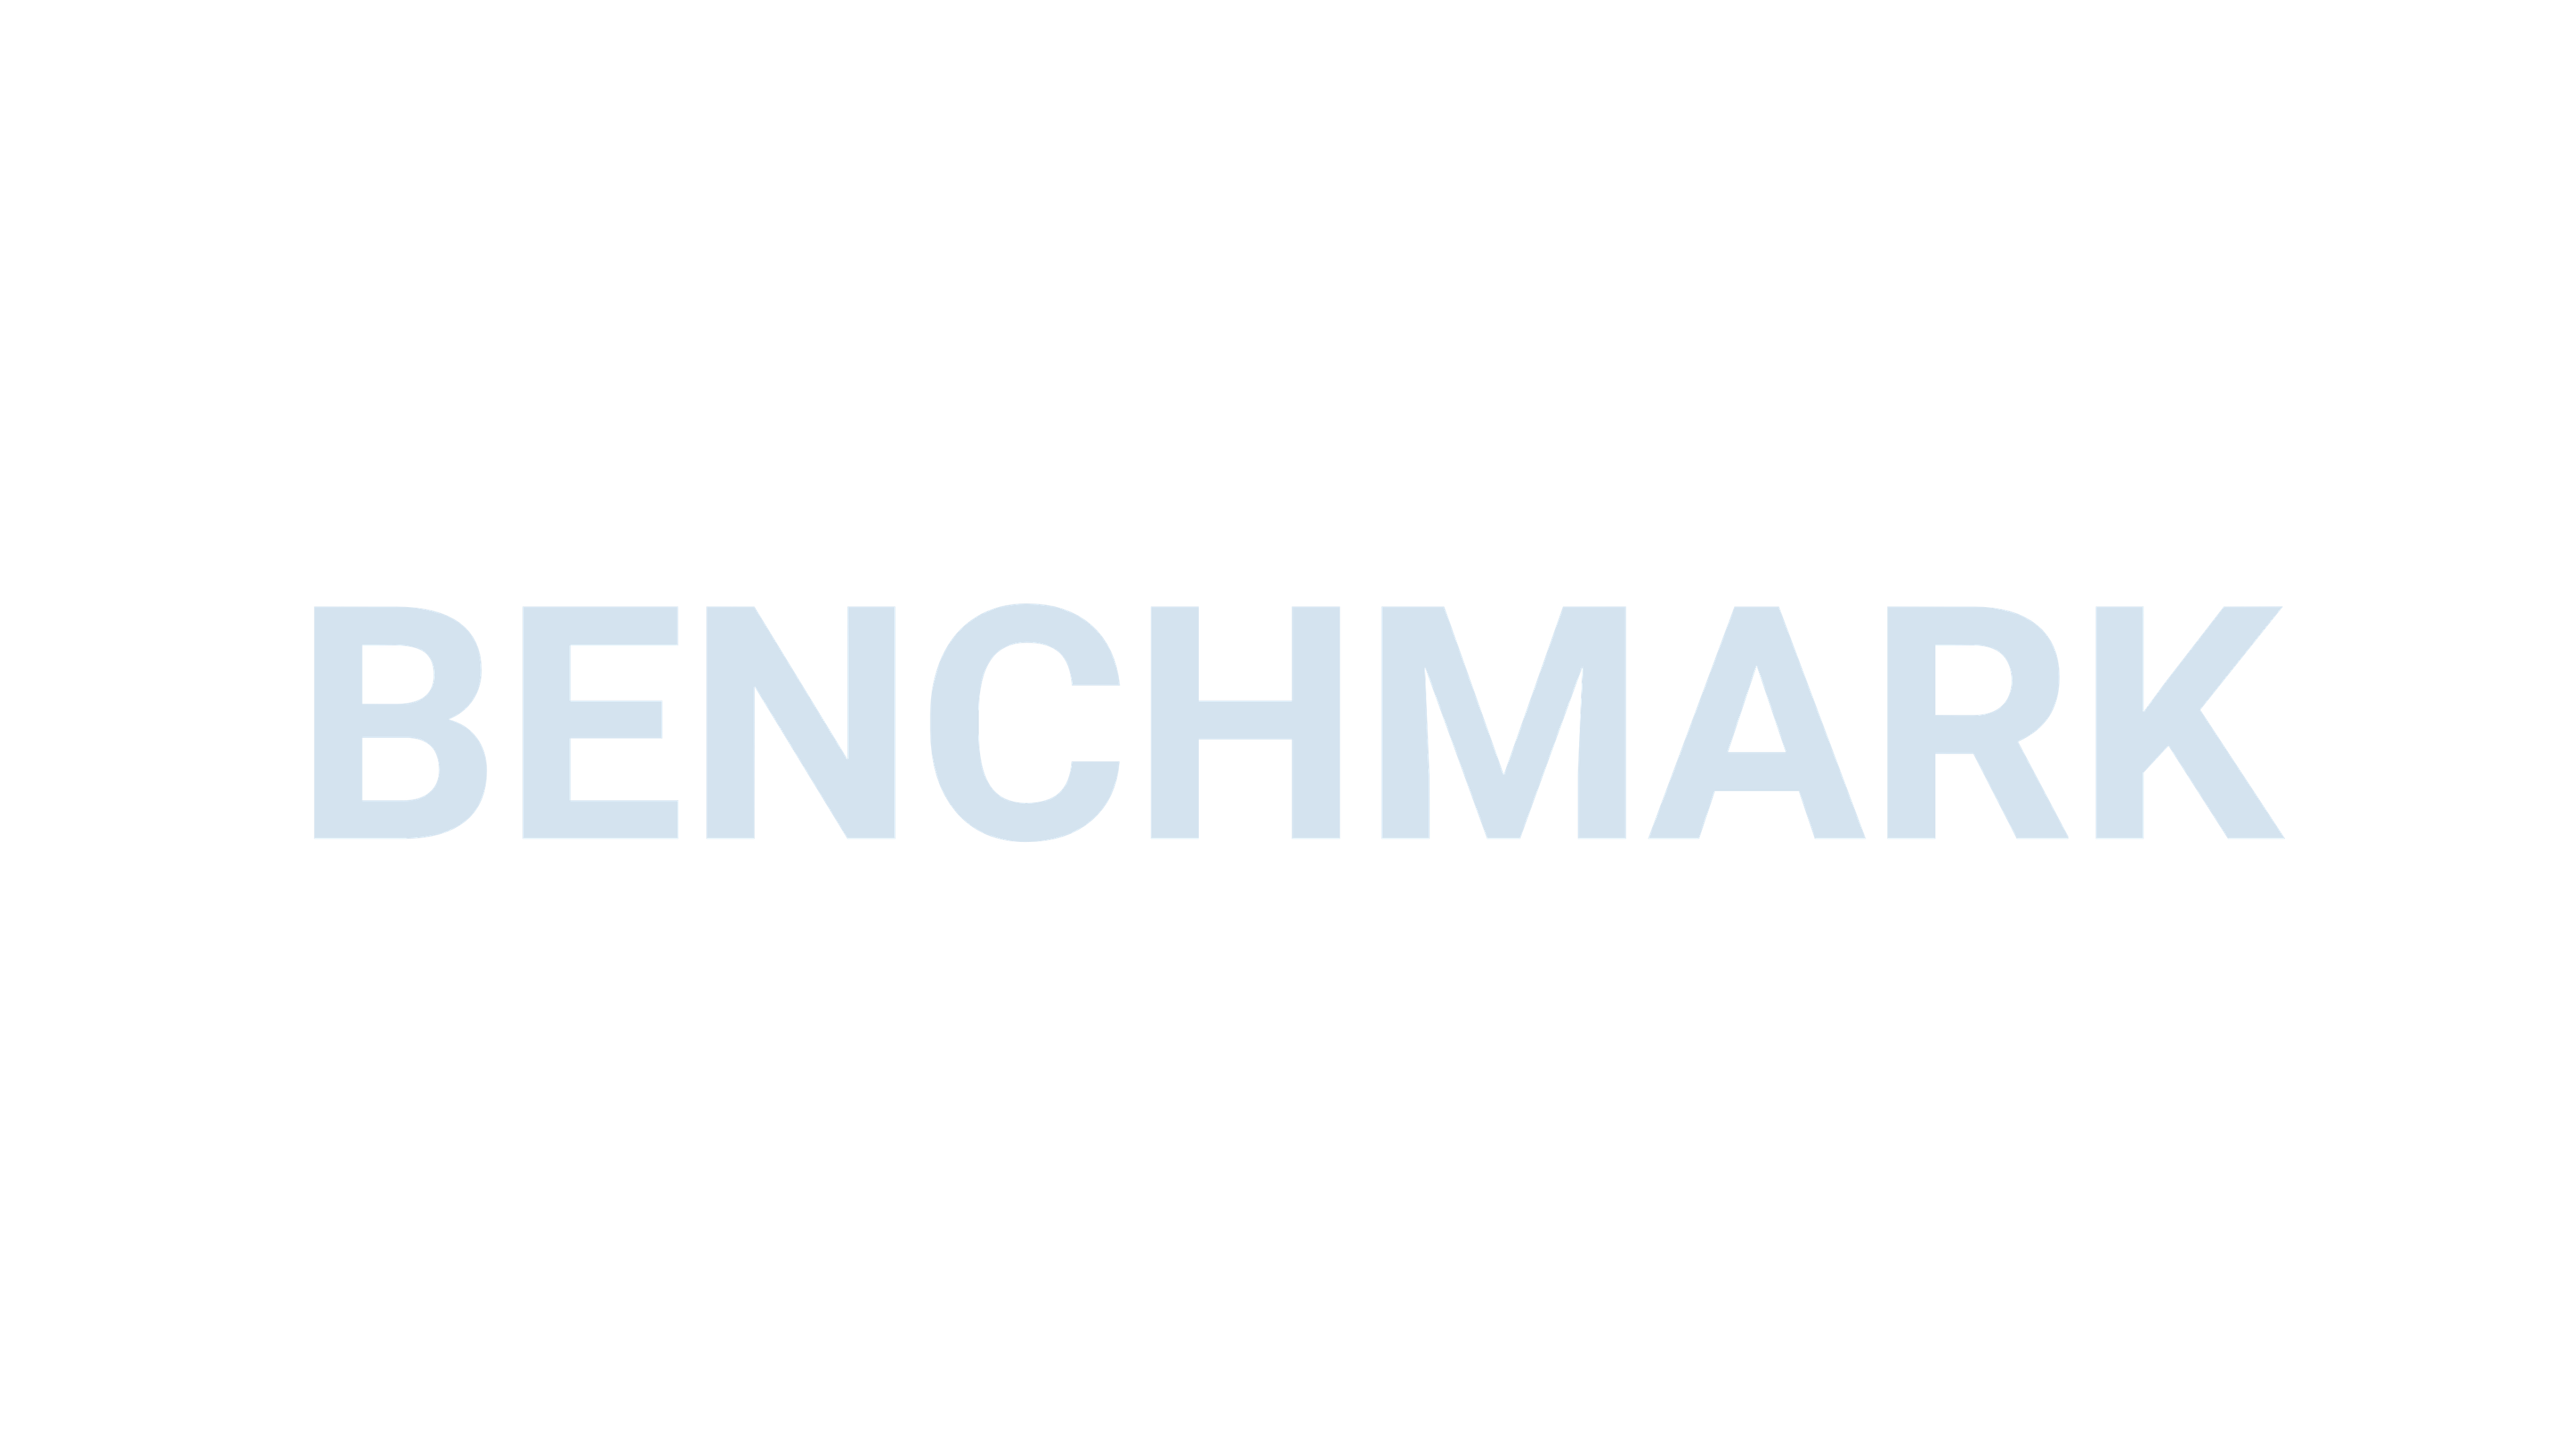 Benchmark suite integrations of benchANT